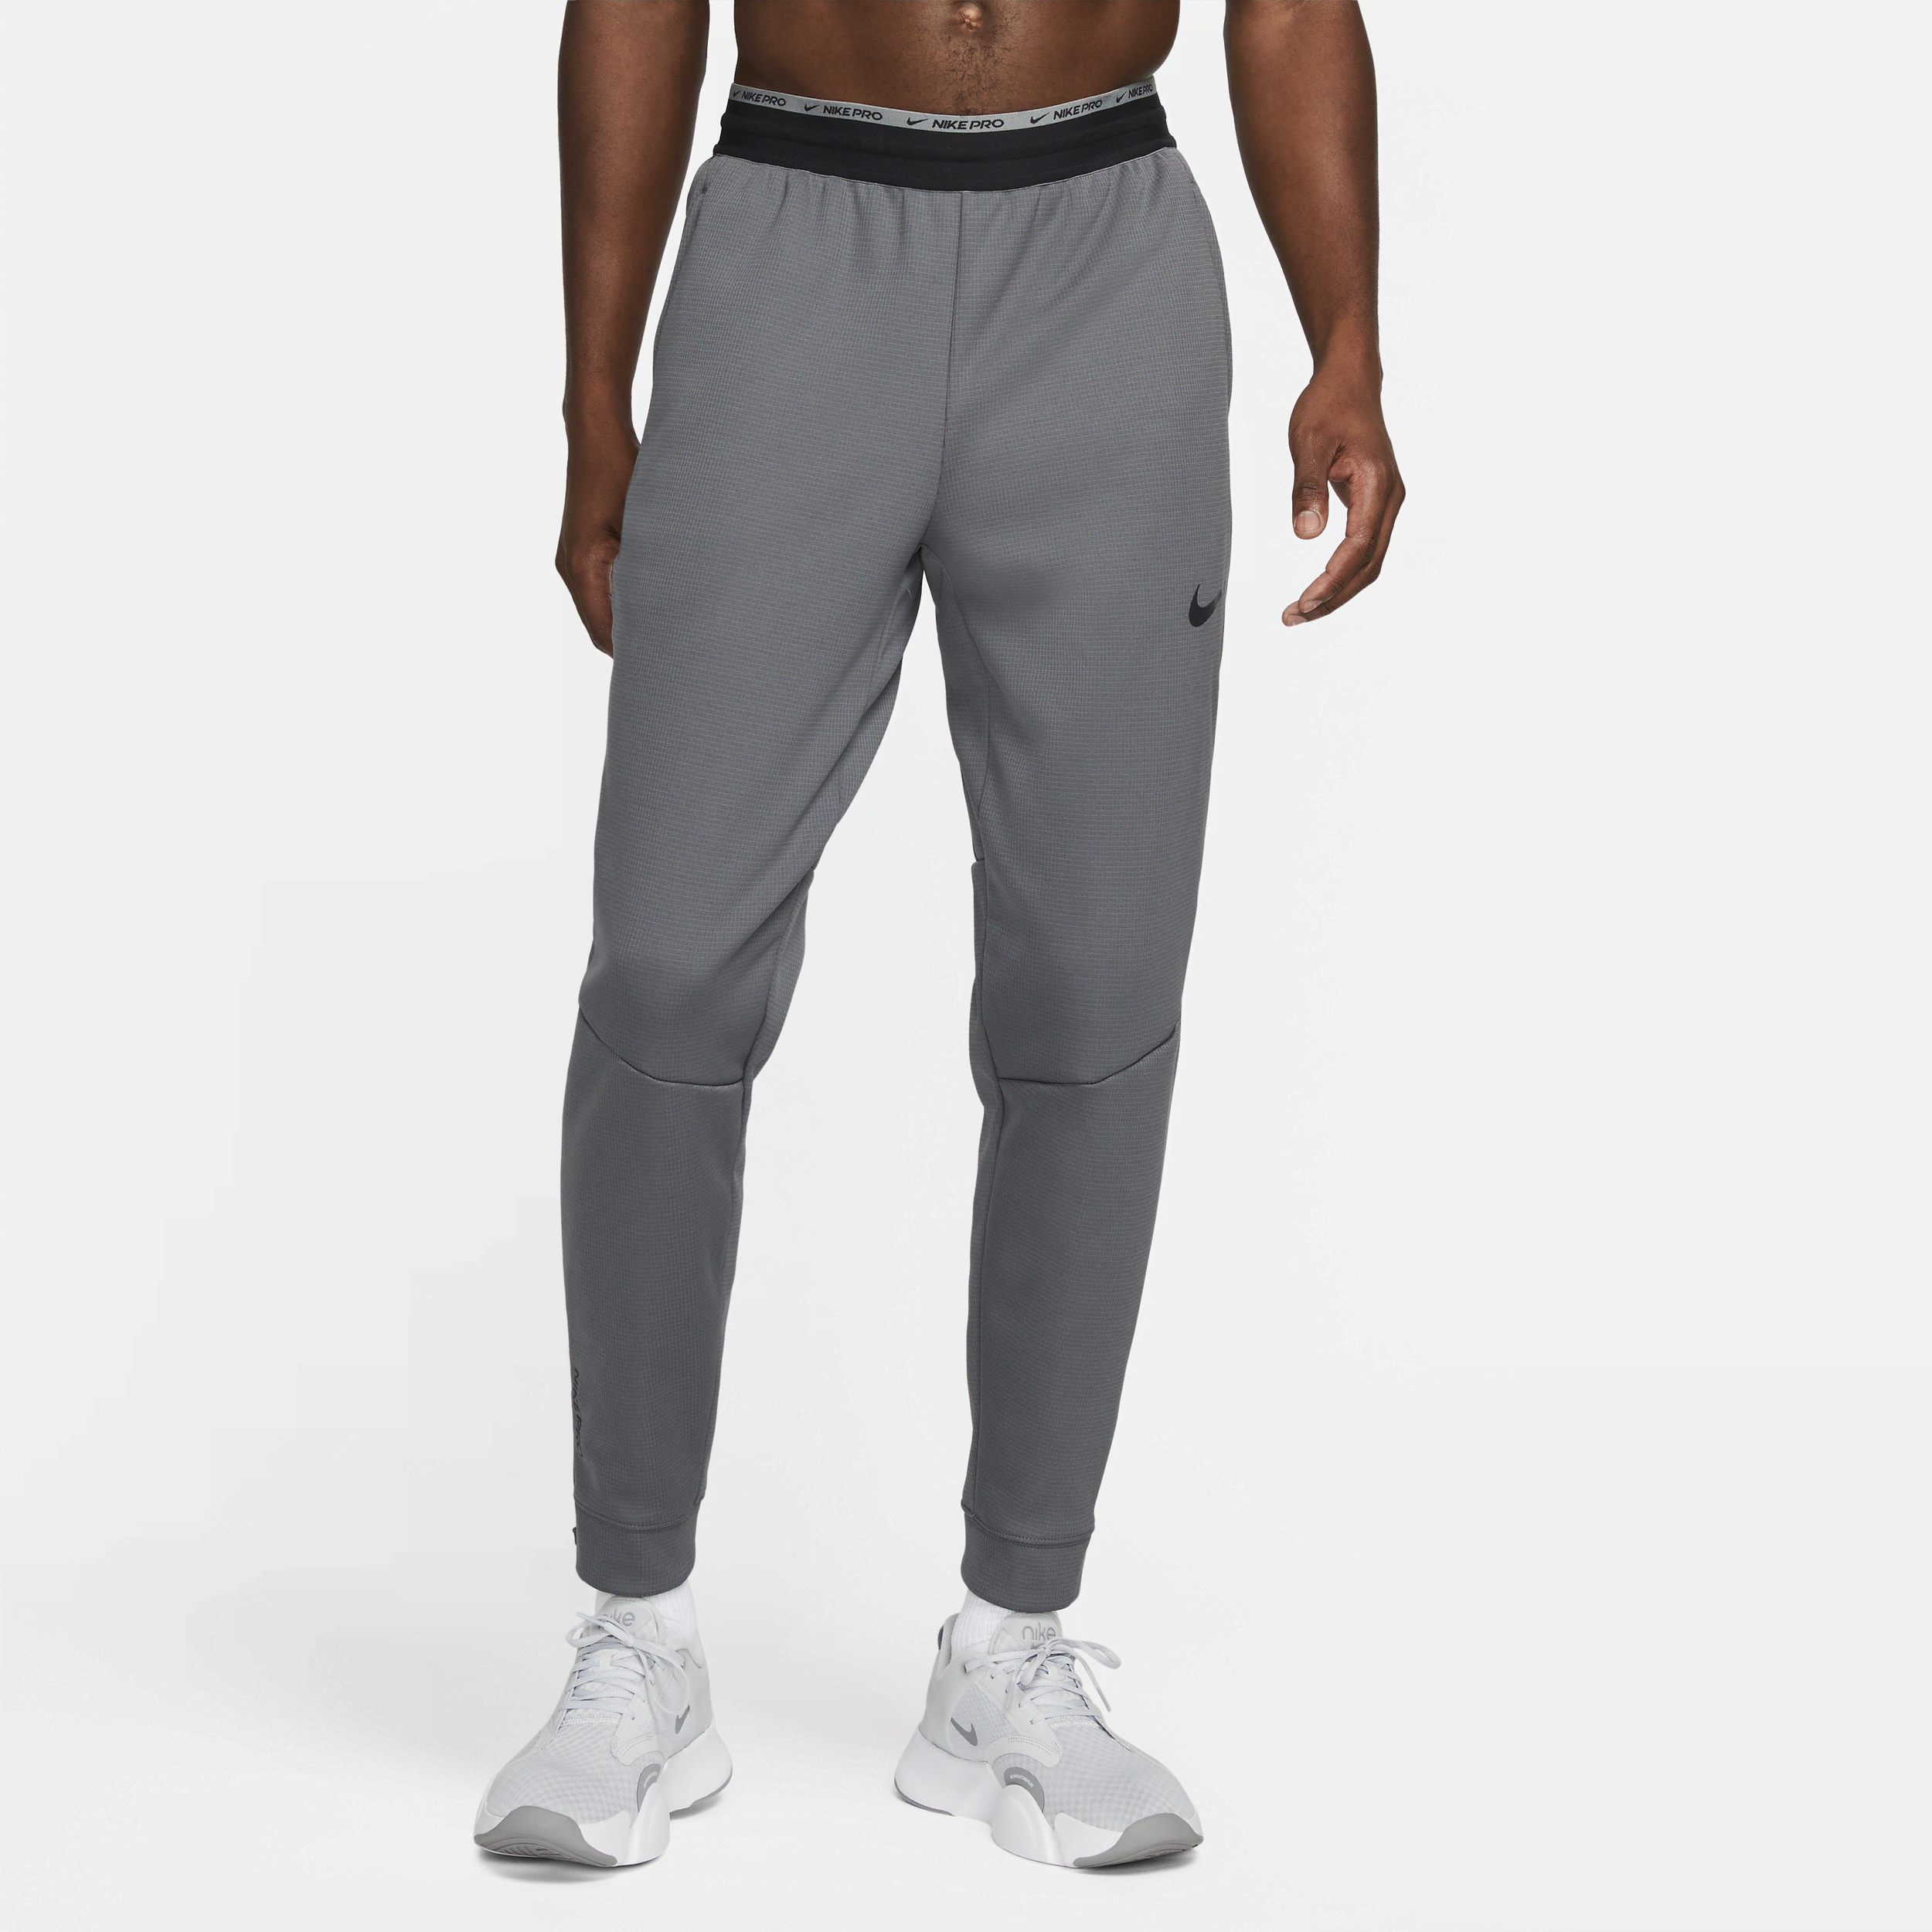 Pantaloni fitness Therma-FIT Nike Therma Sphere – Uomo - Grigio